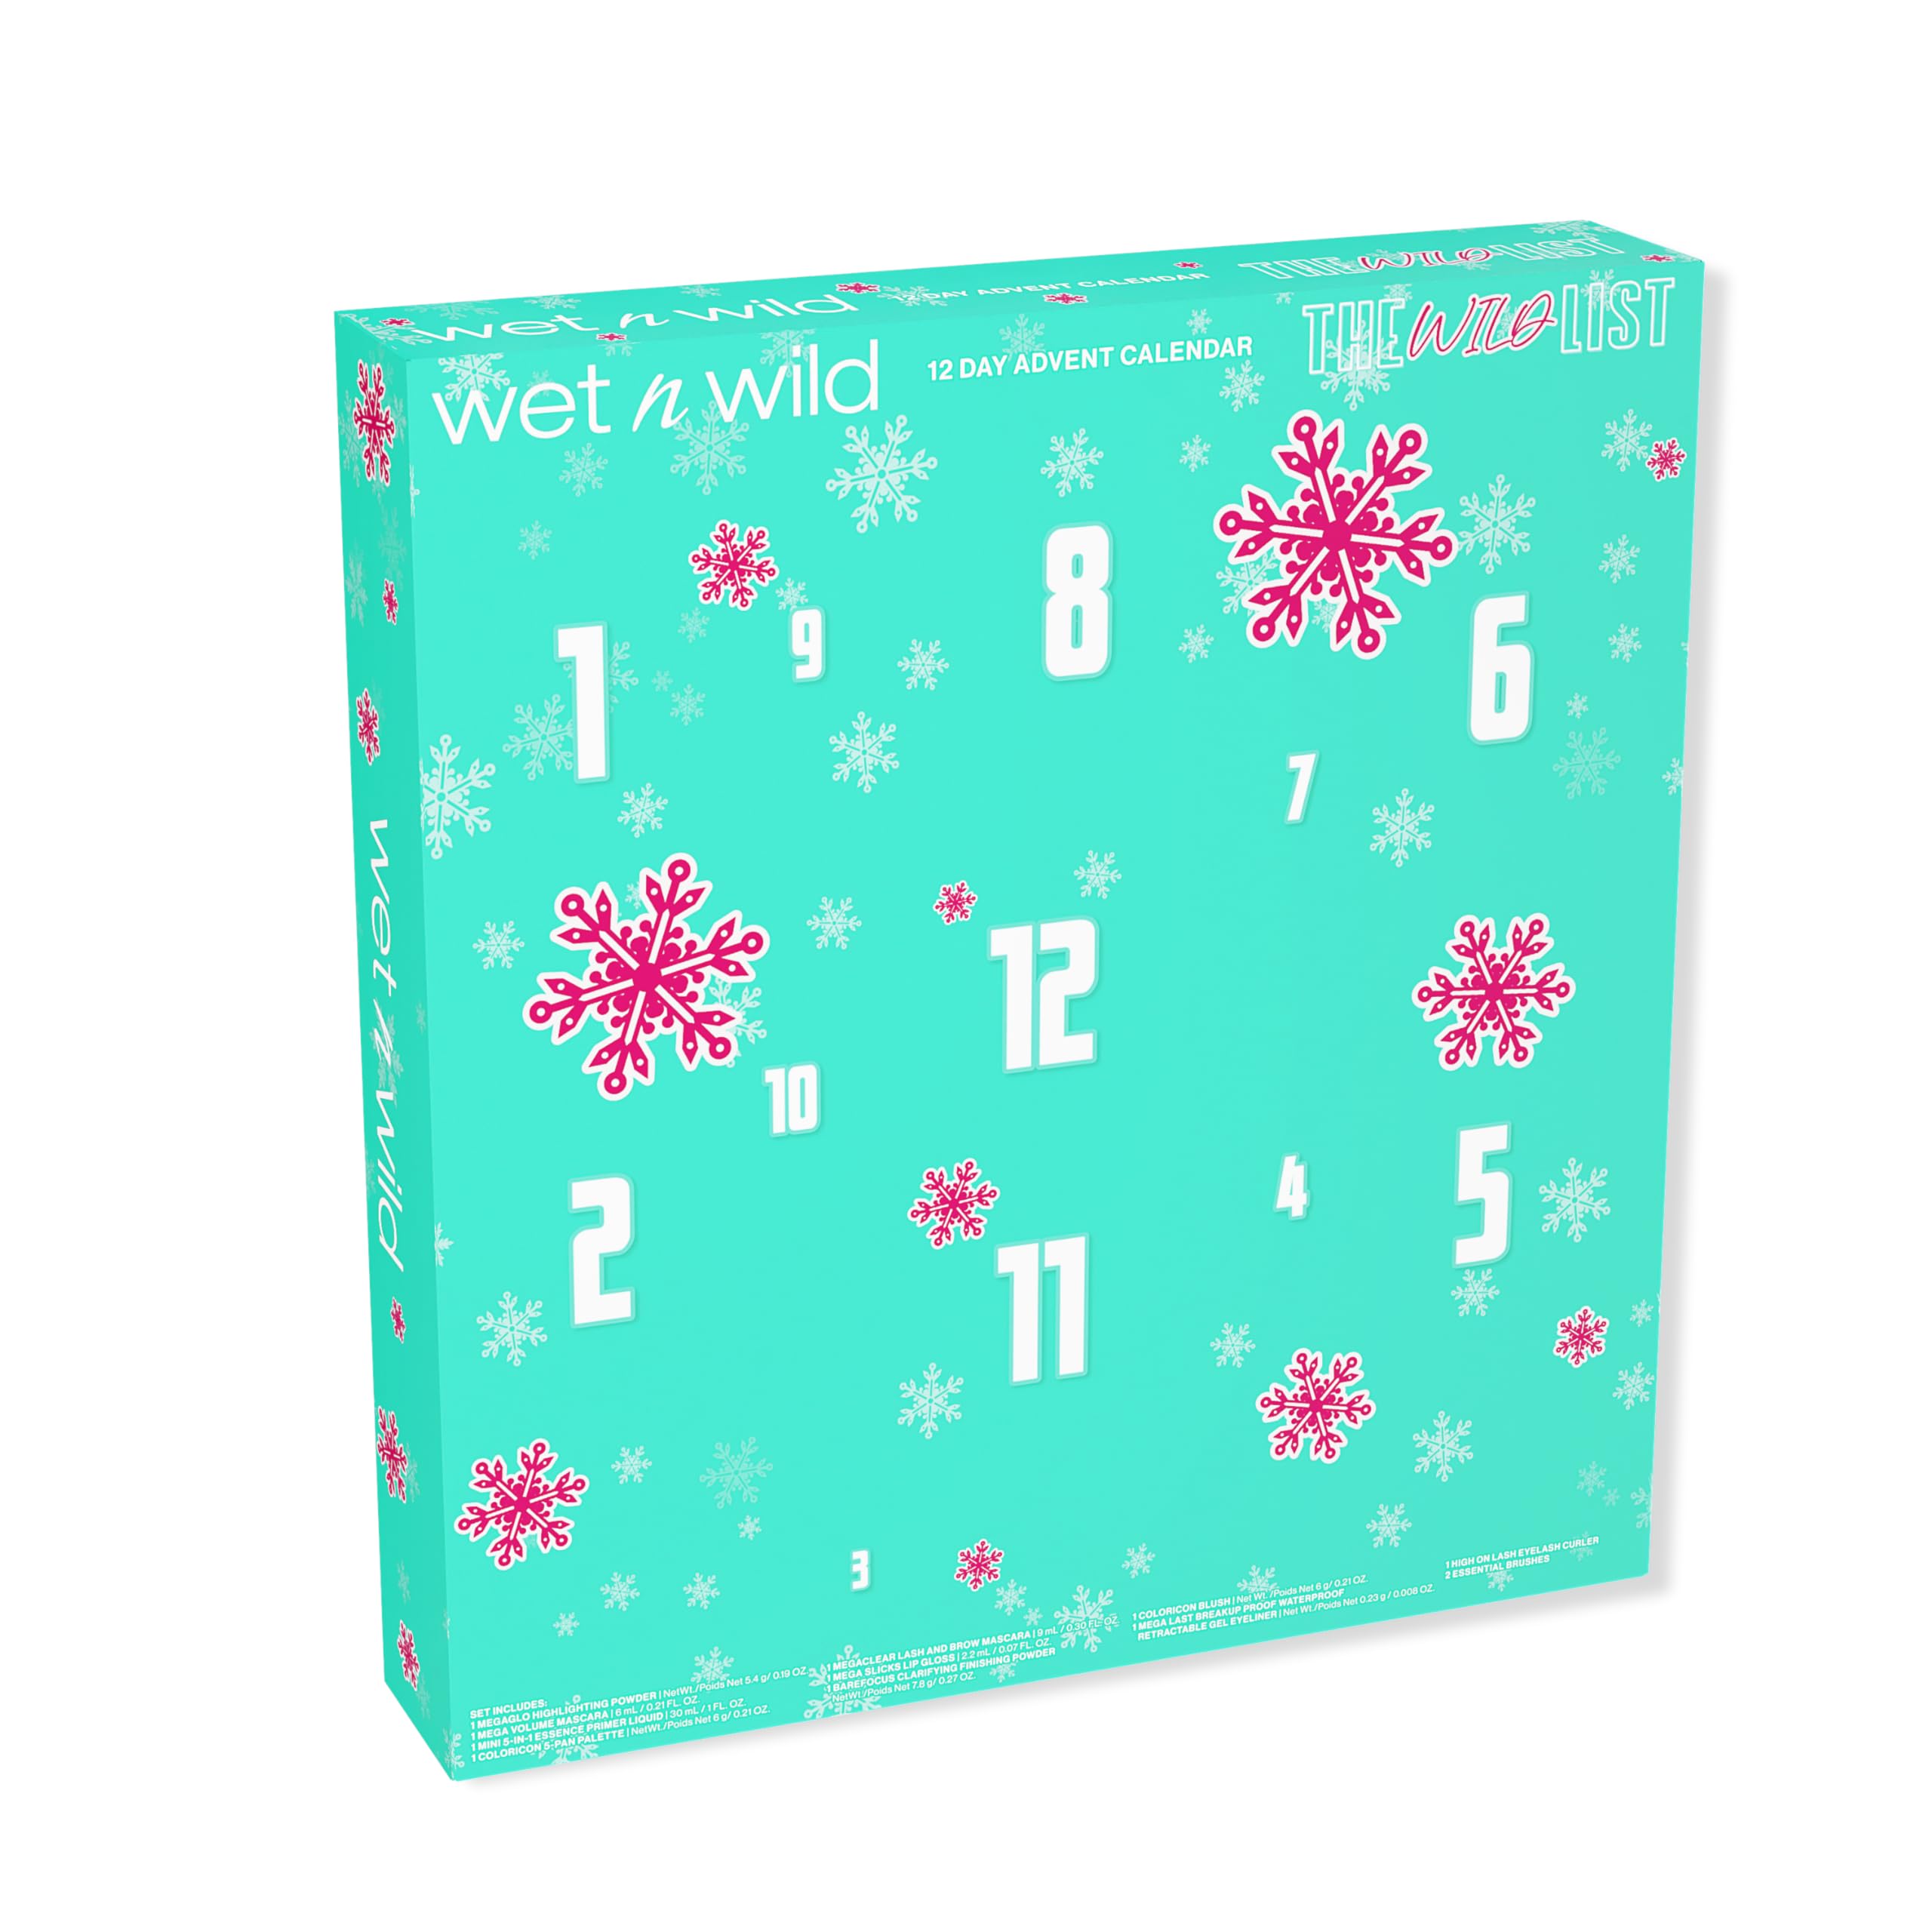 wet n wild The Wild List Advent Calendar